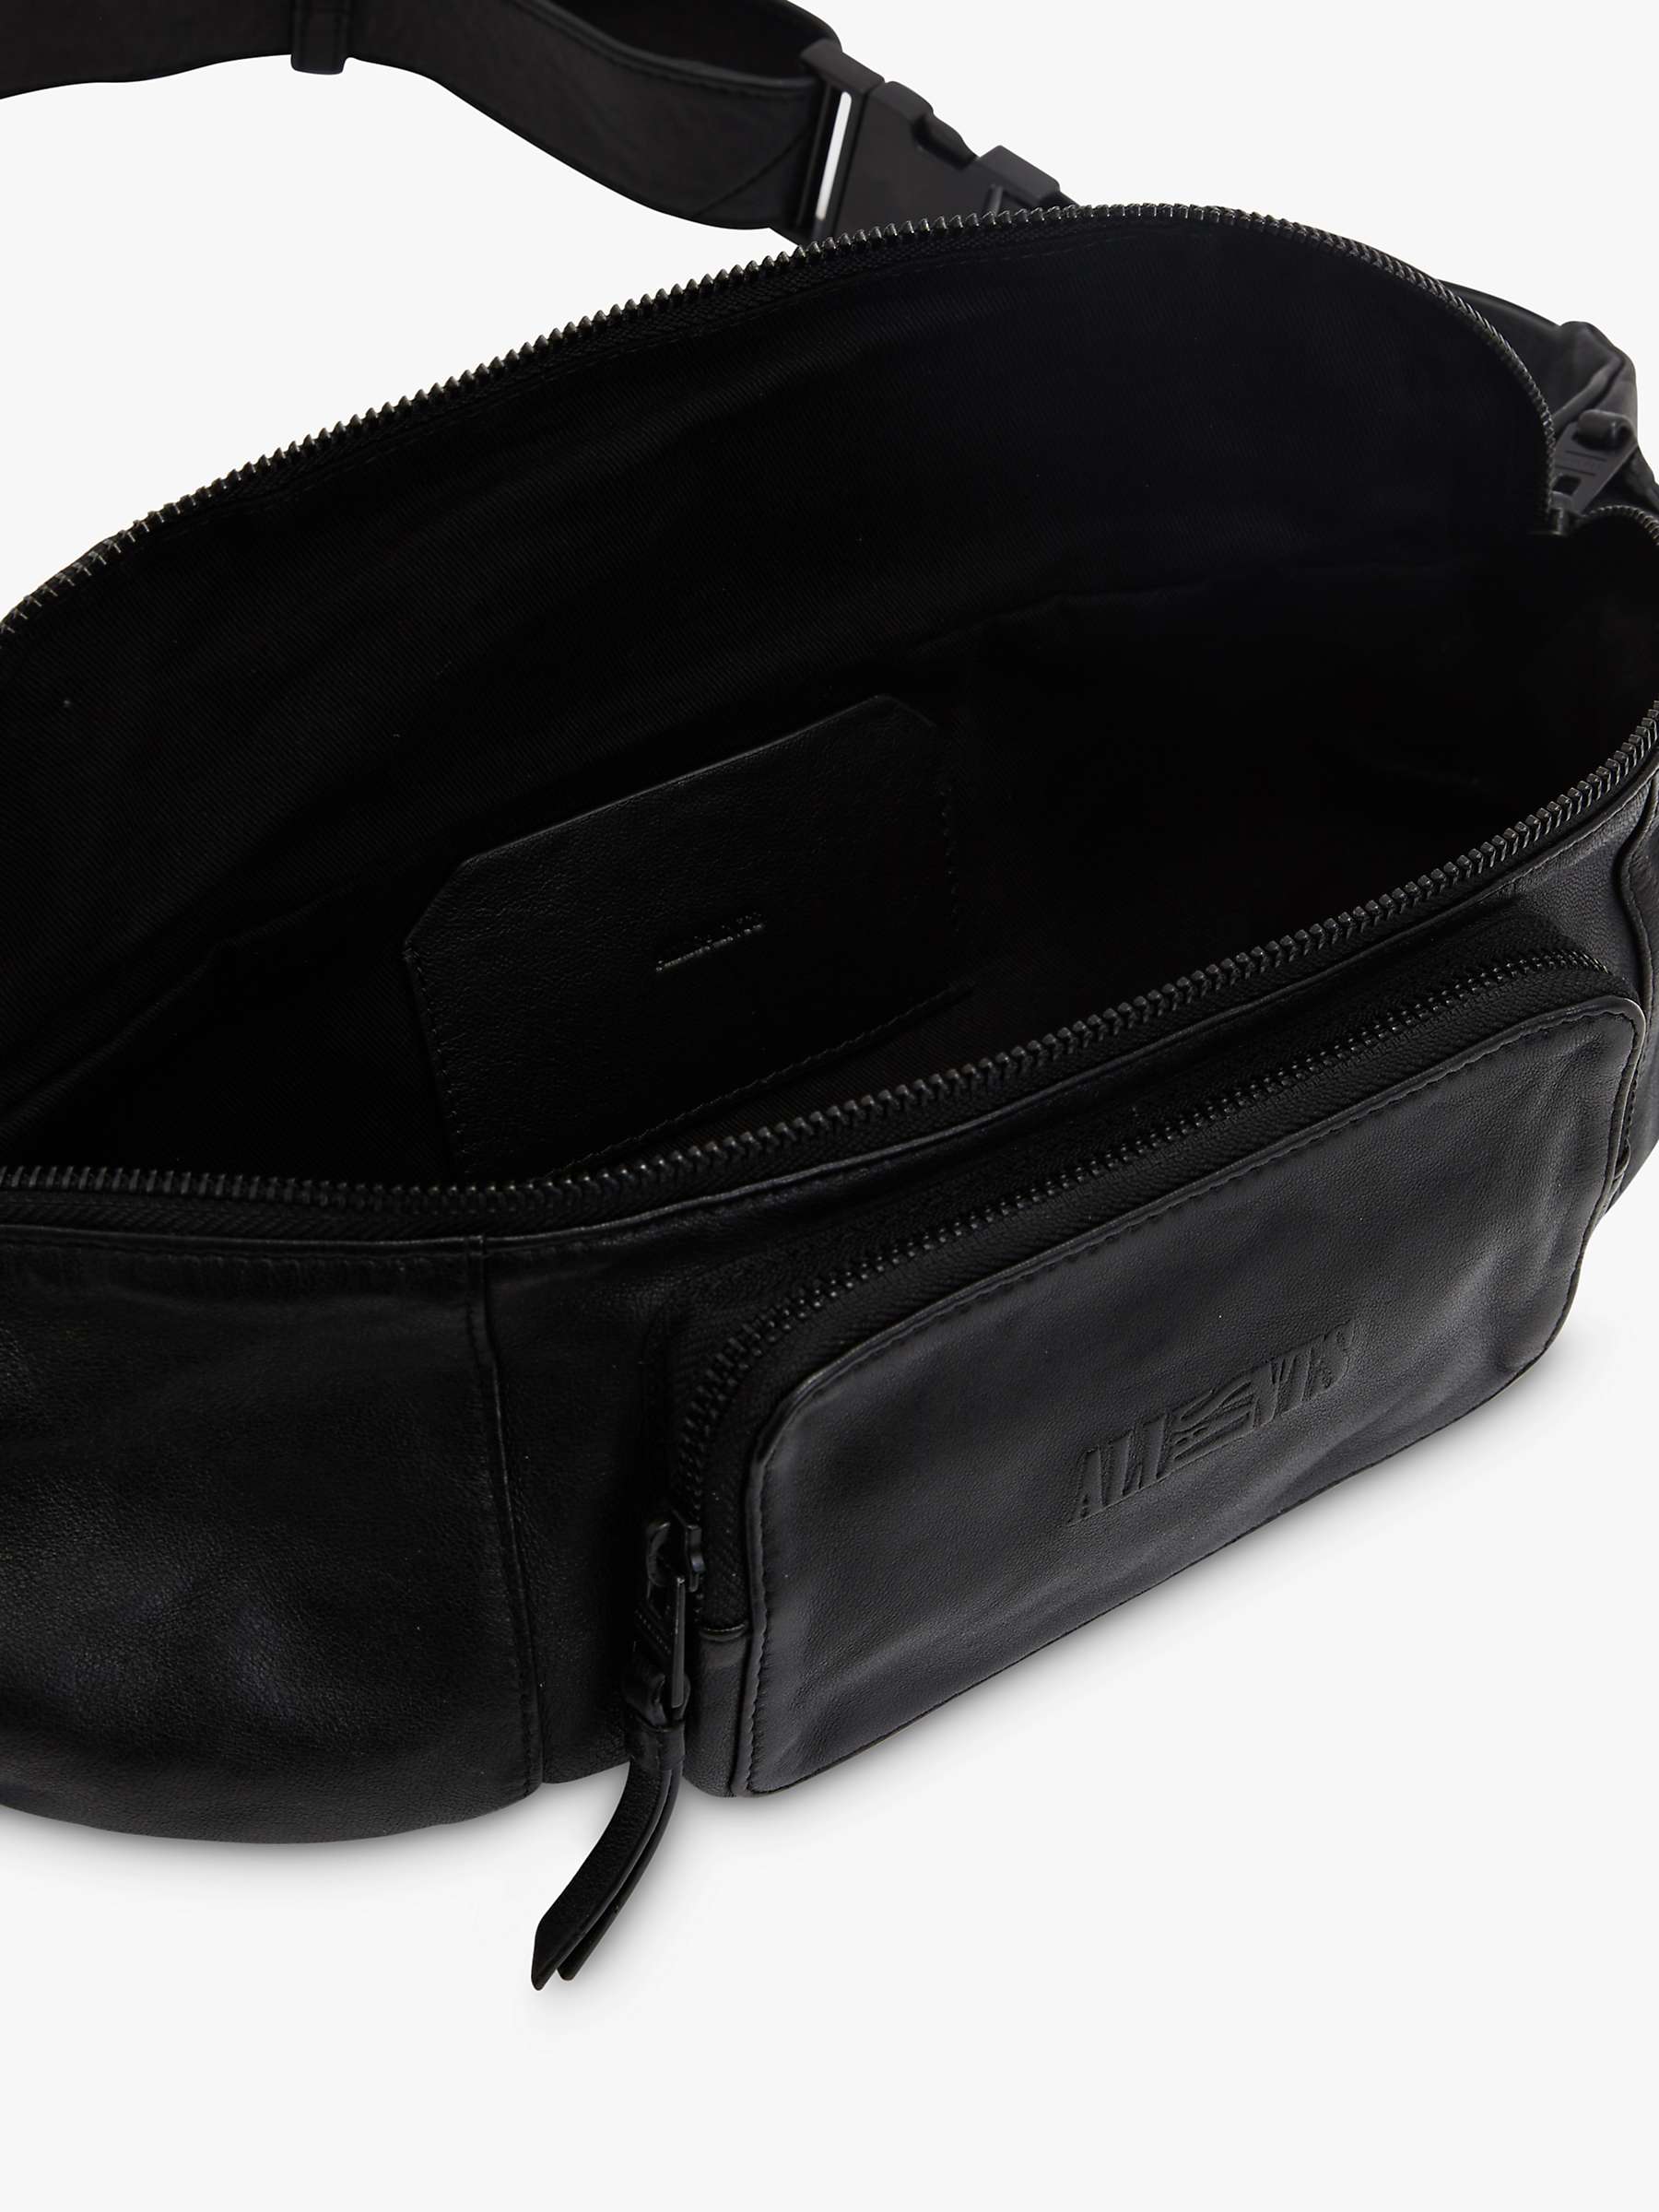 Buy Allsaints Oppose Leather Bum Bag, Black Online at johnlewis.com